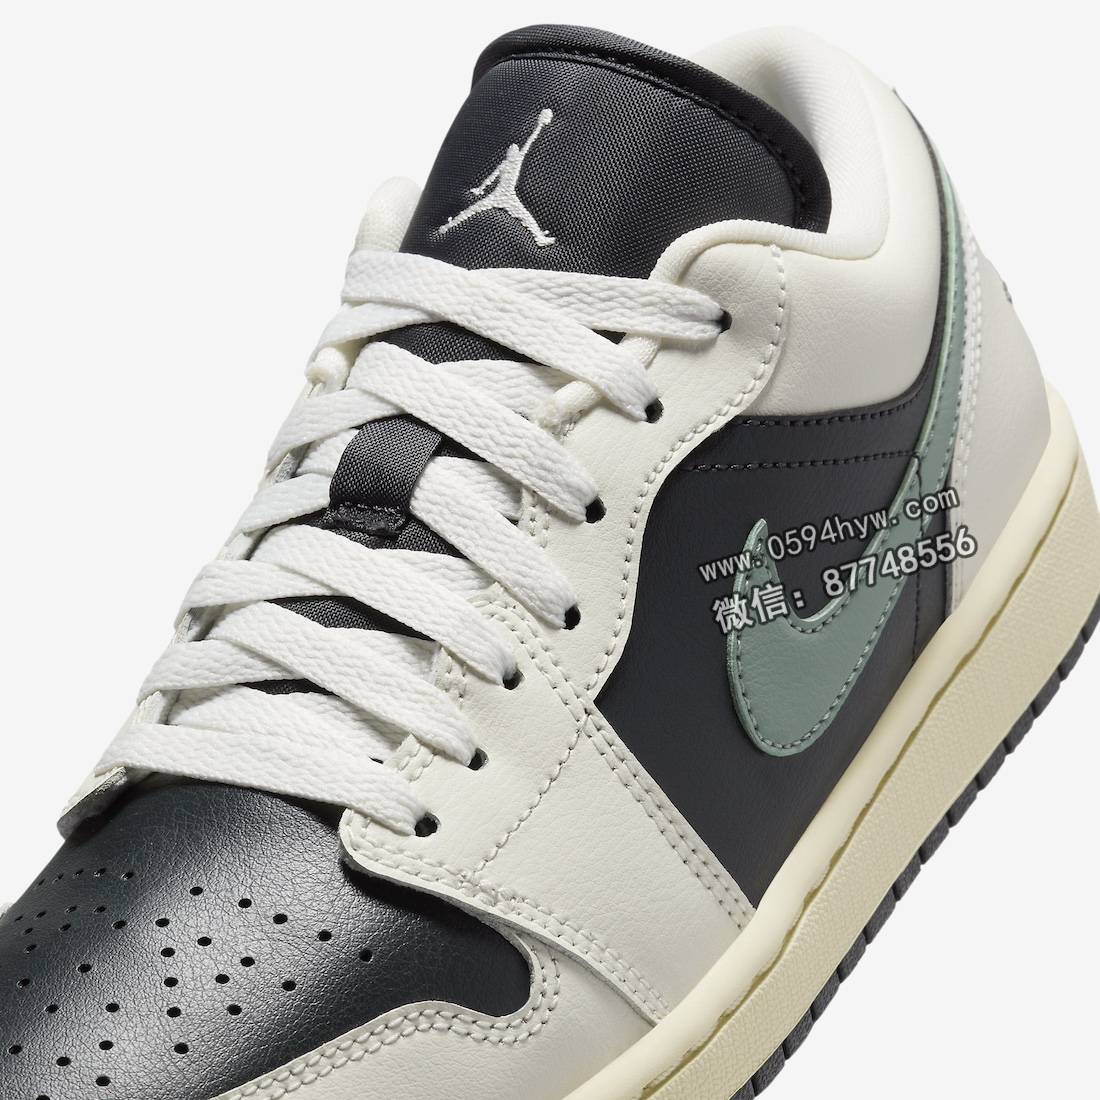 Jumpman, Jordan, Air Jordan 1 Low, Air Jordan 1, Air Jordan, AI, 2024 - "Air Jordan 1低帮 '青烟翡翠' 将于2024年春季发布"